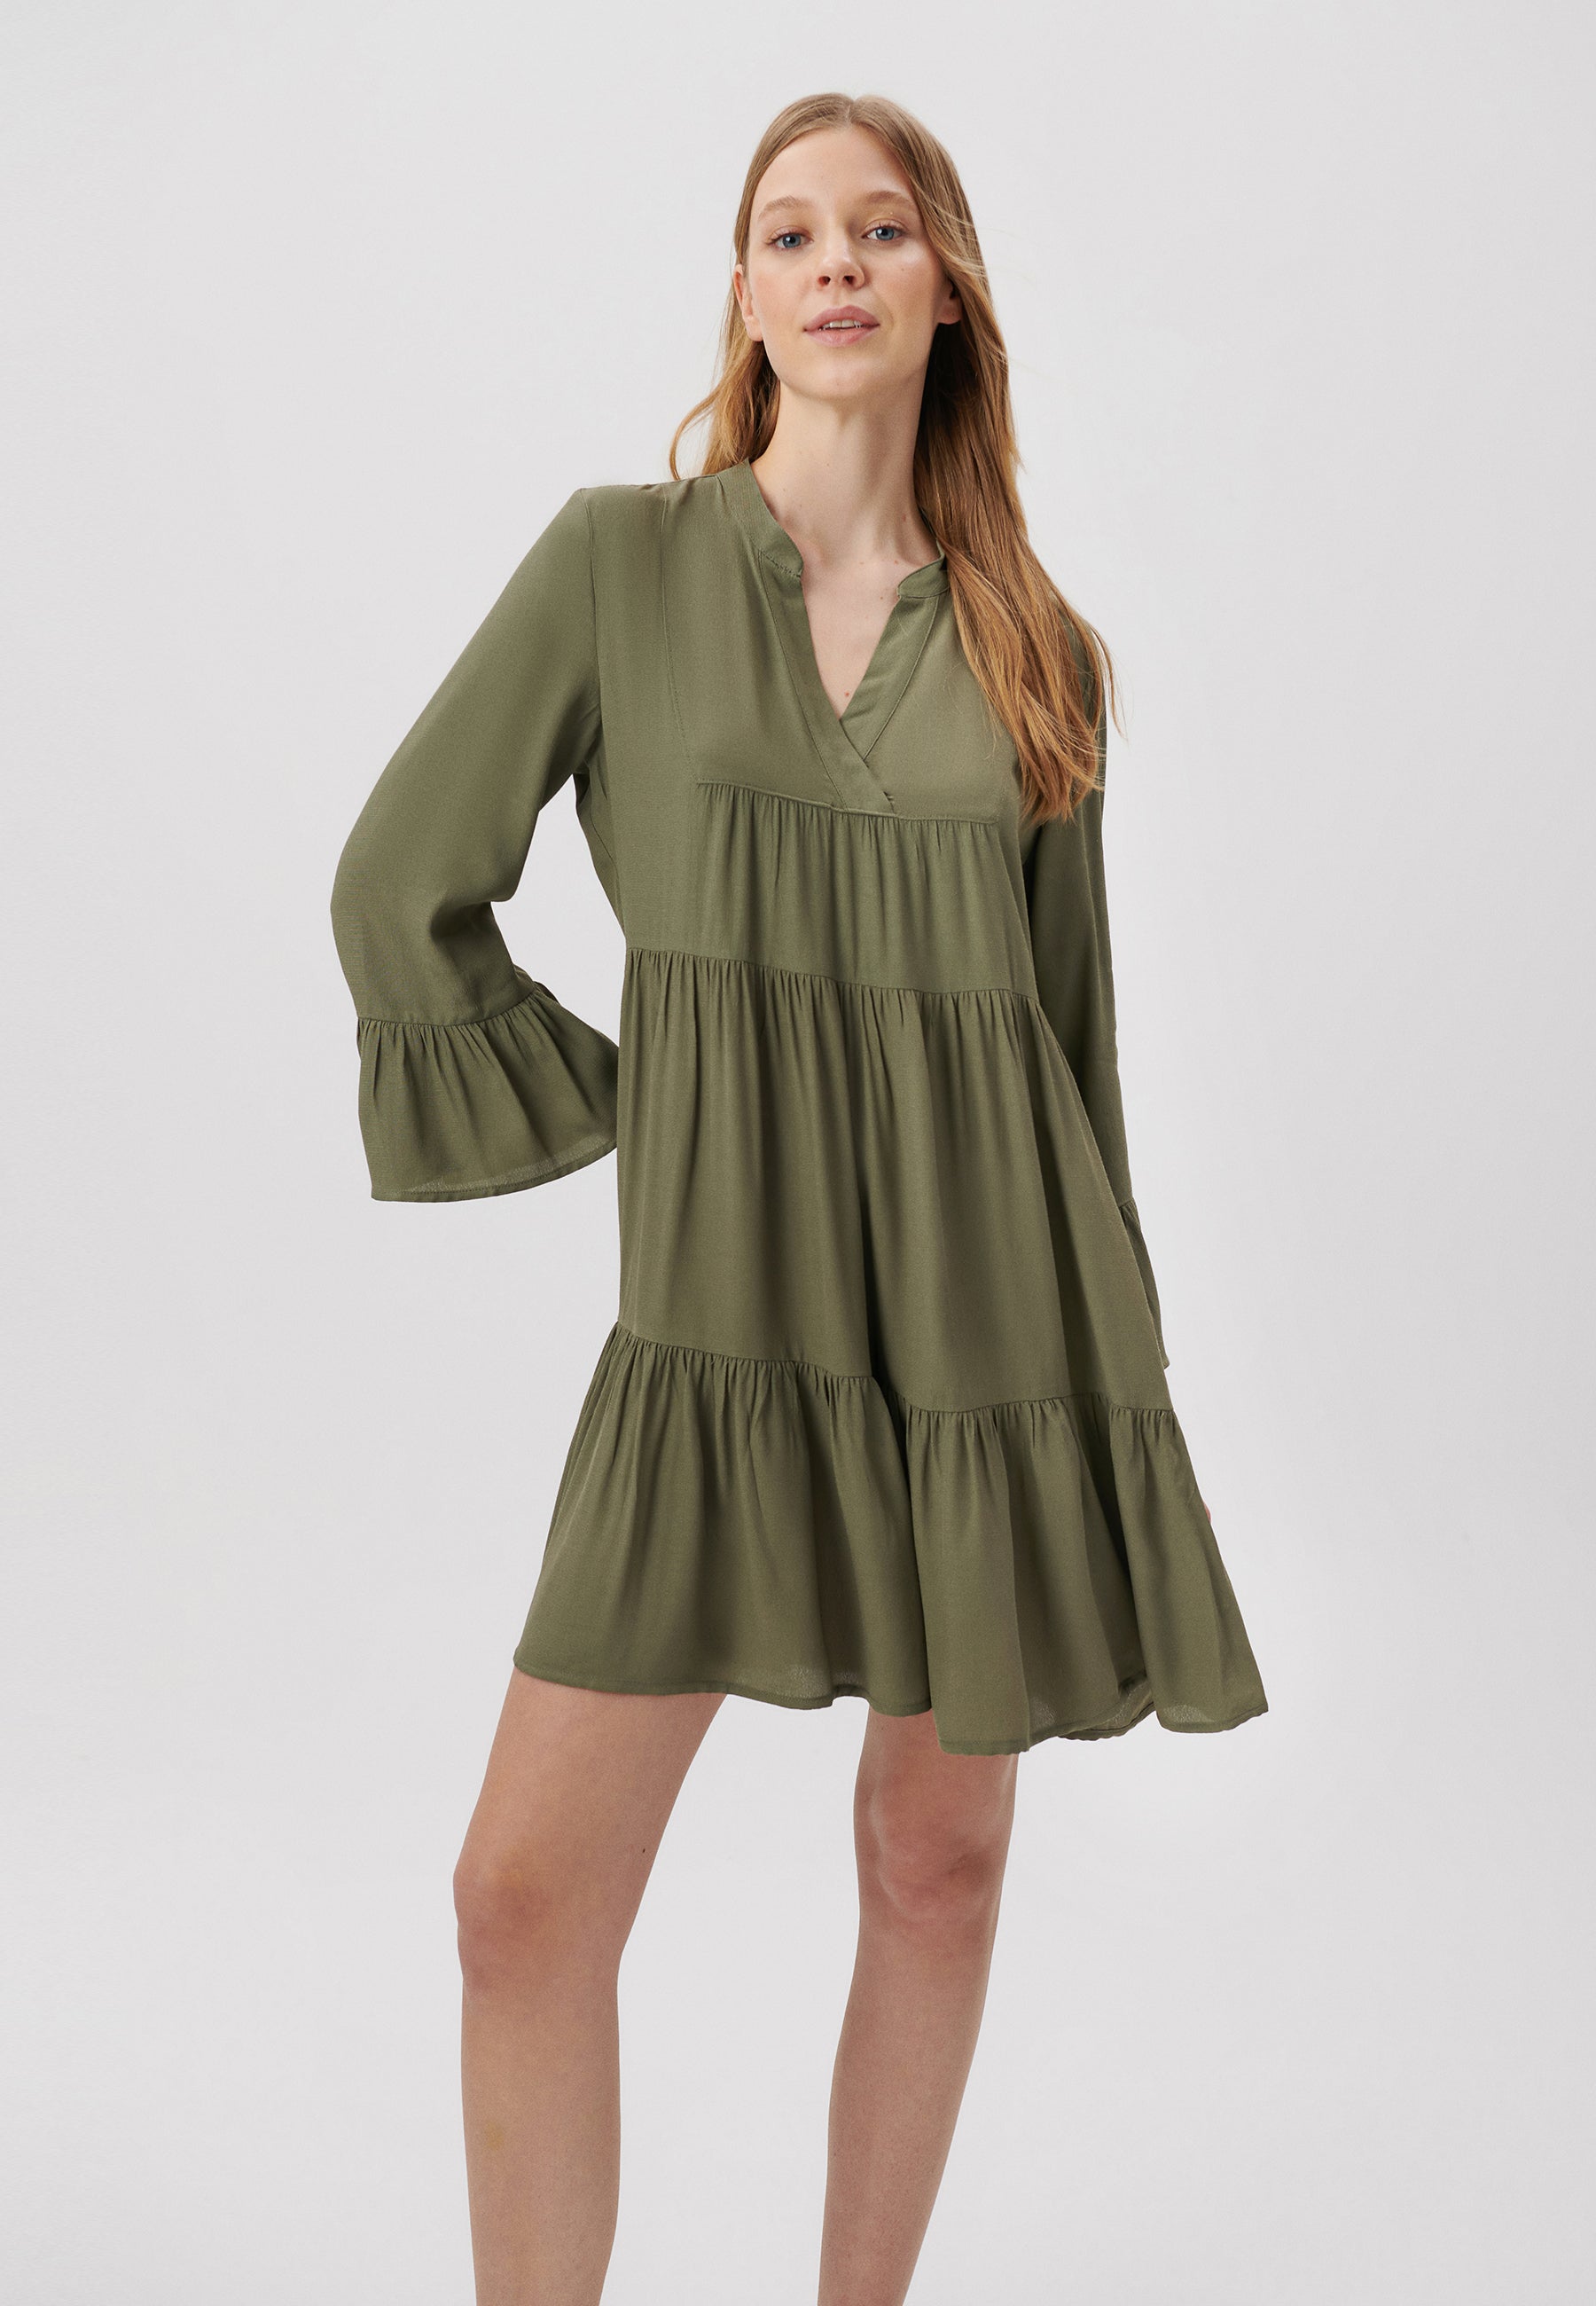 Woven Dress in Tea Leaf Kleider Mavi   